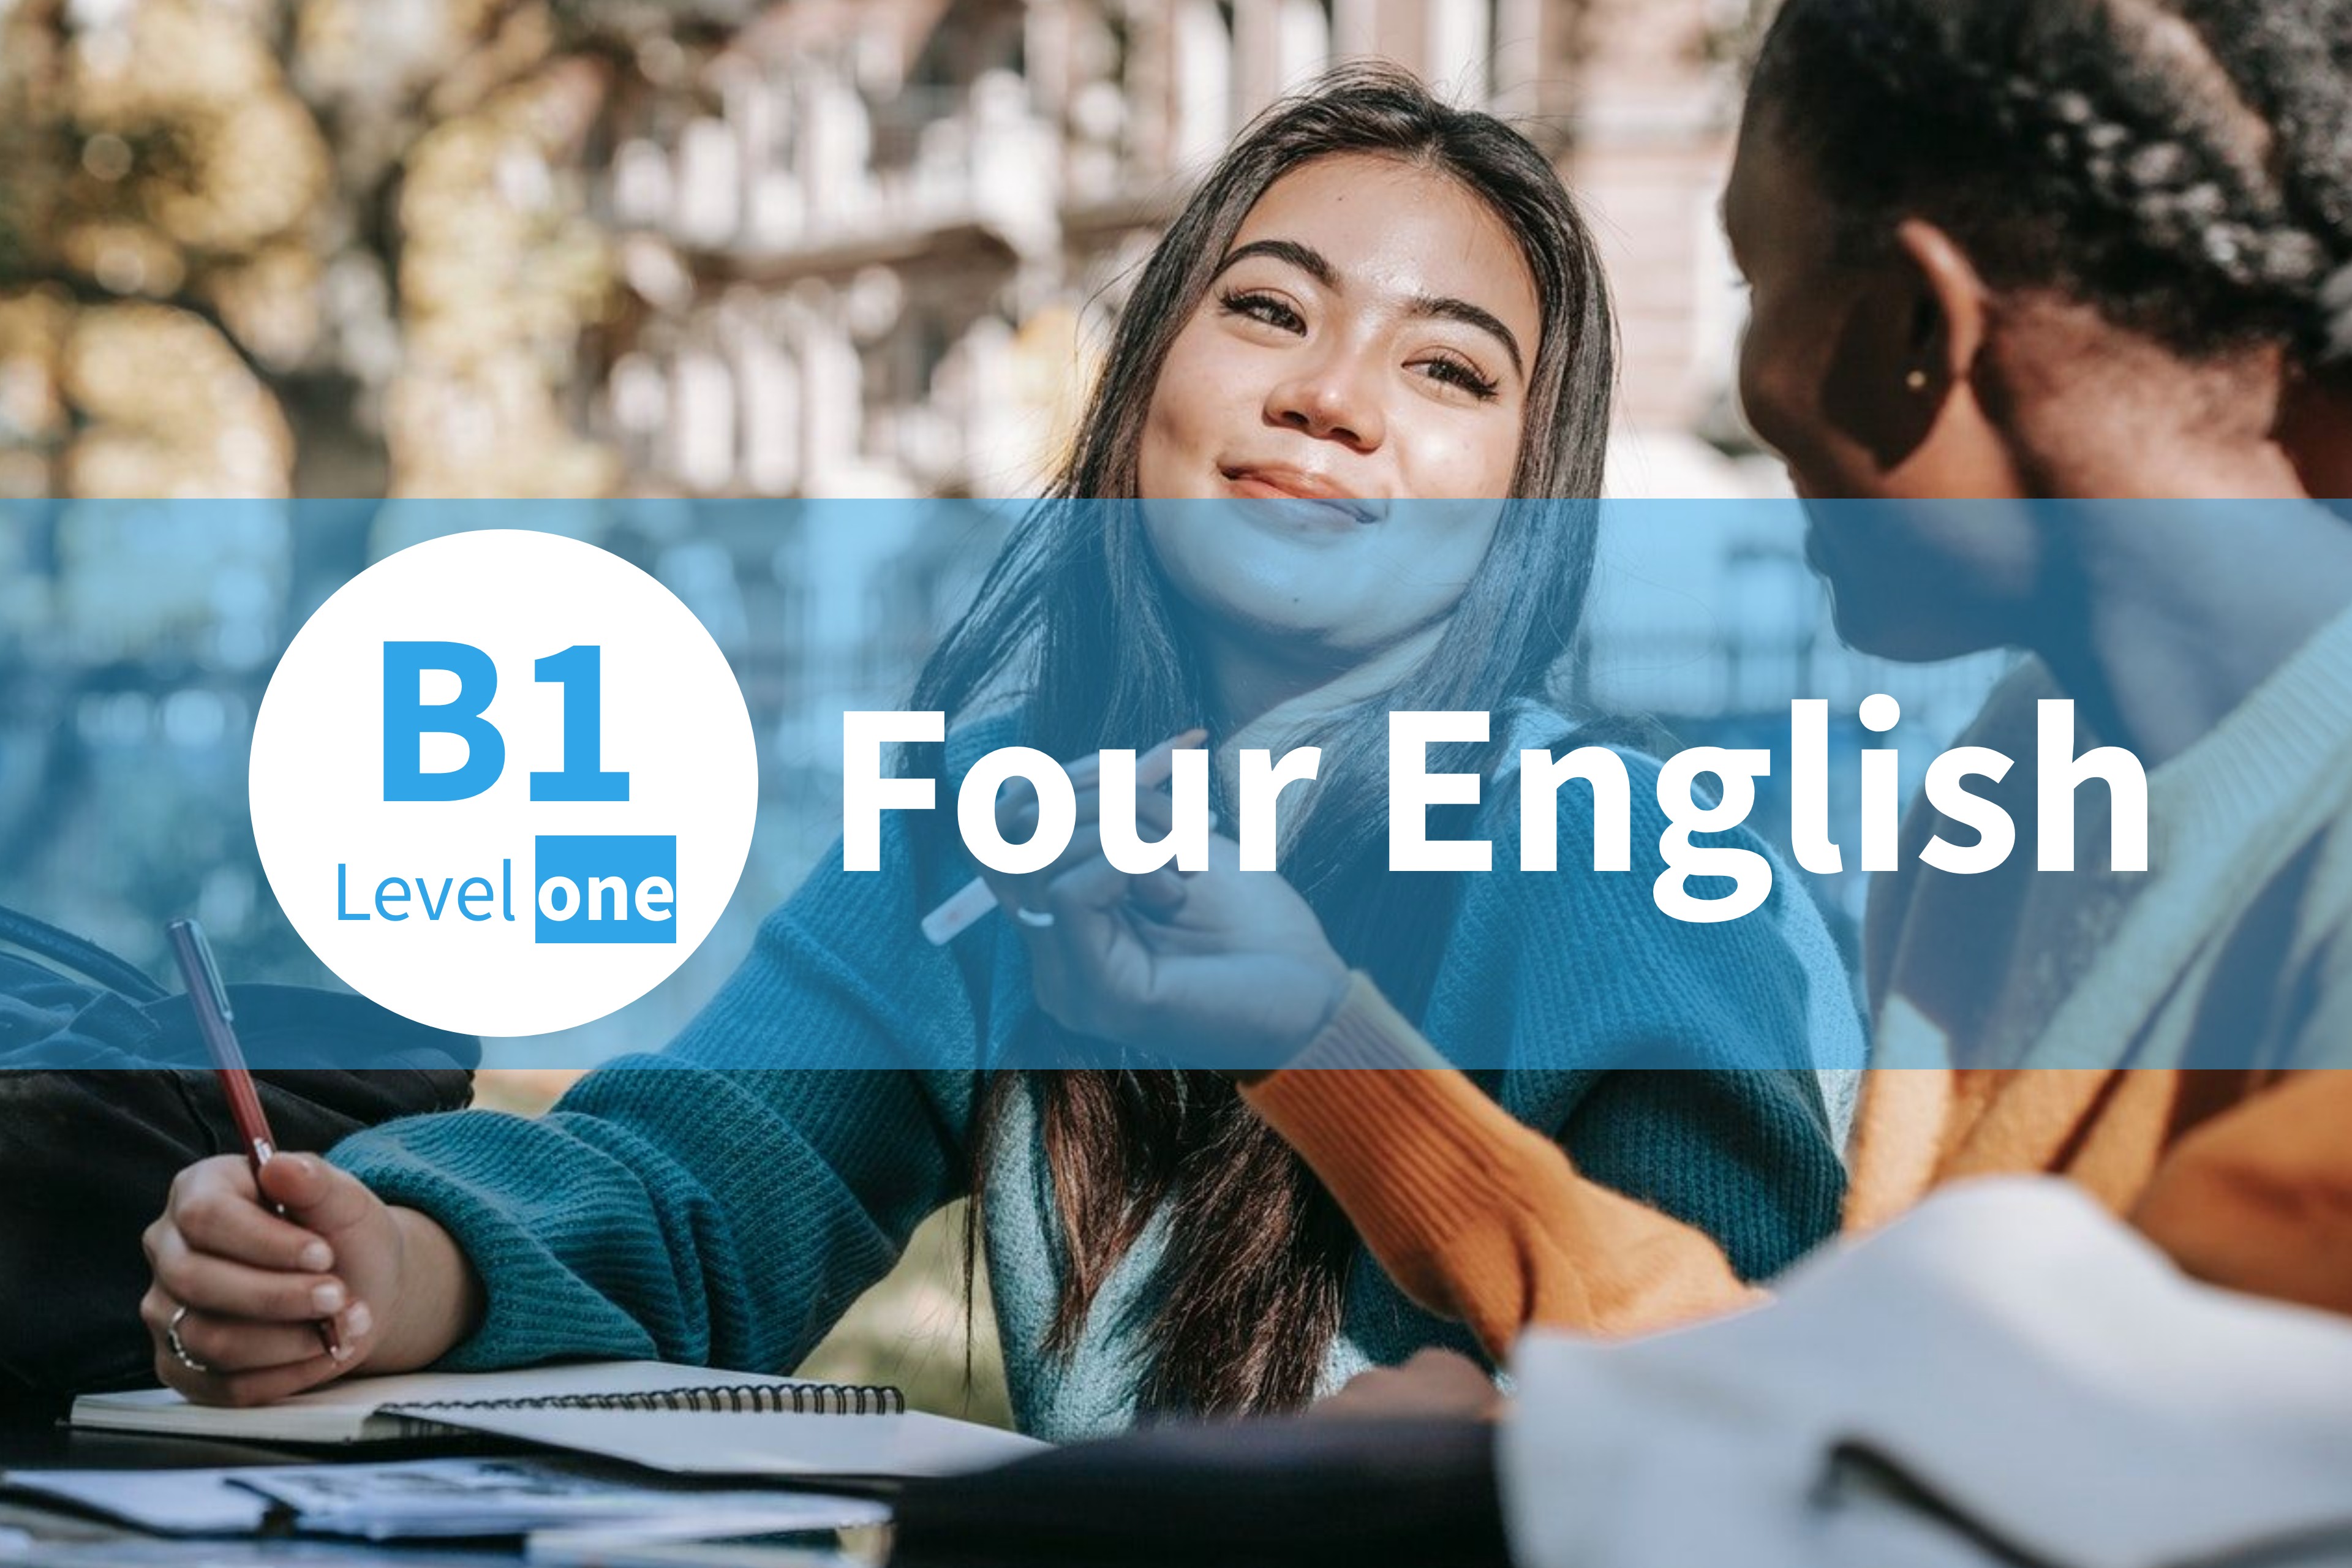 FOUR ENGLISH (INGLÉS B1) LEVEL ONE